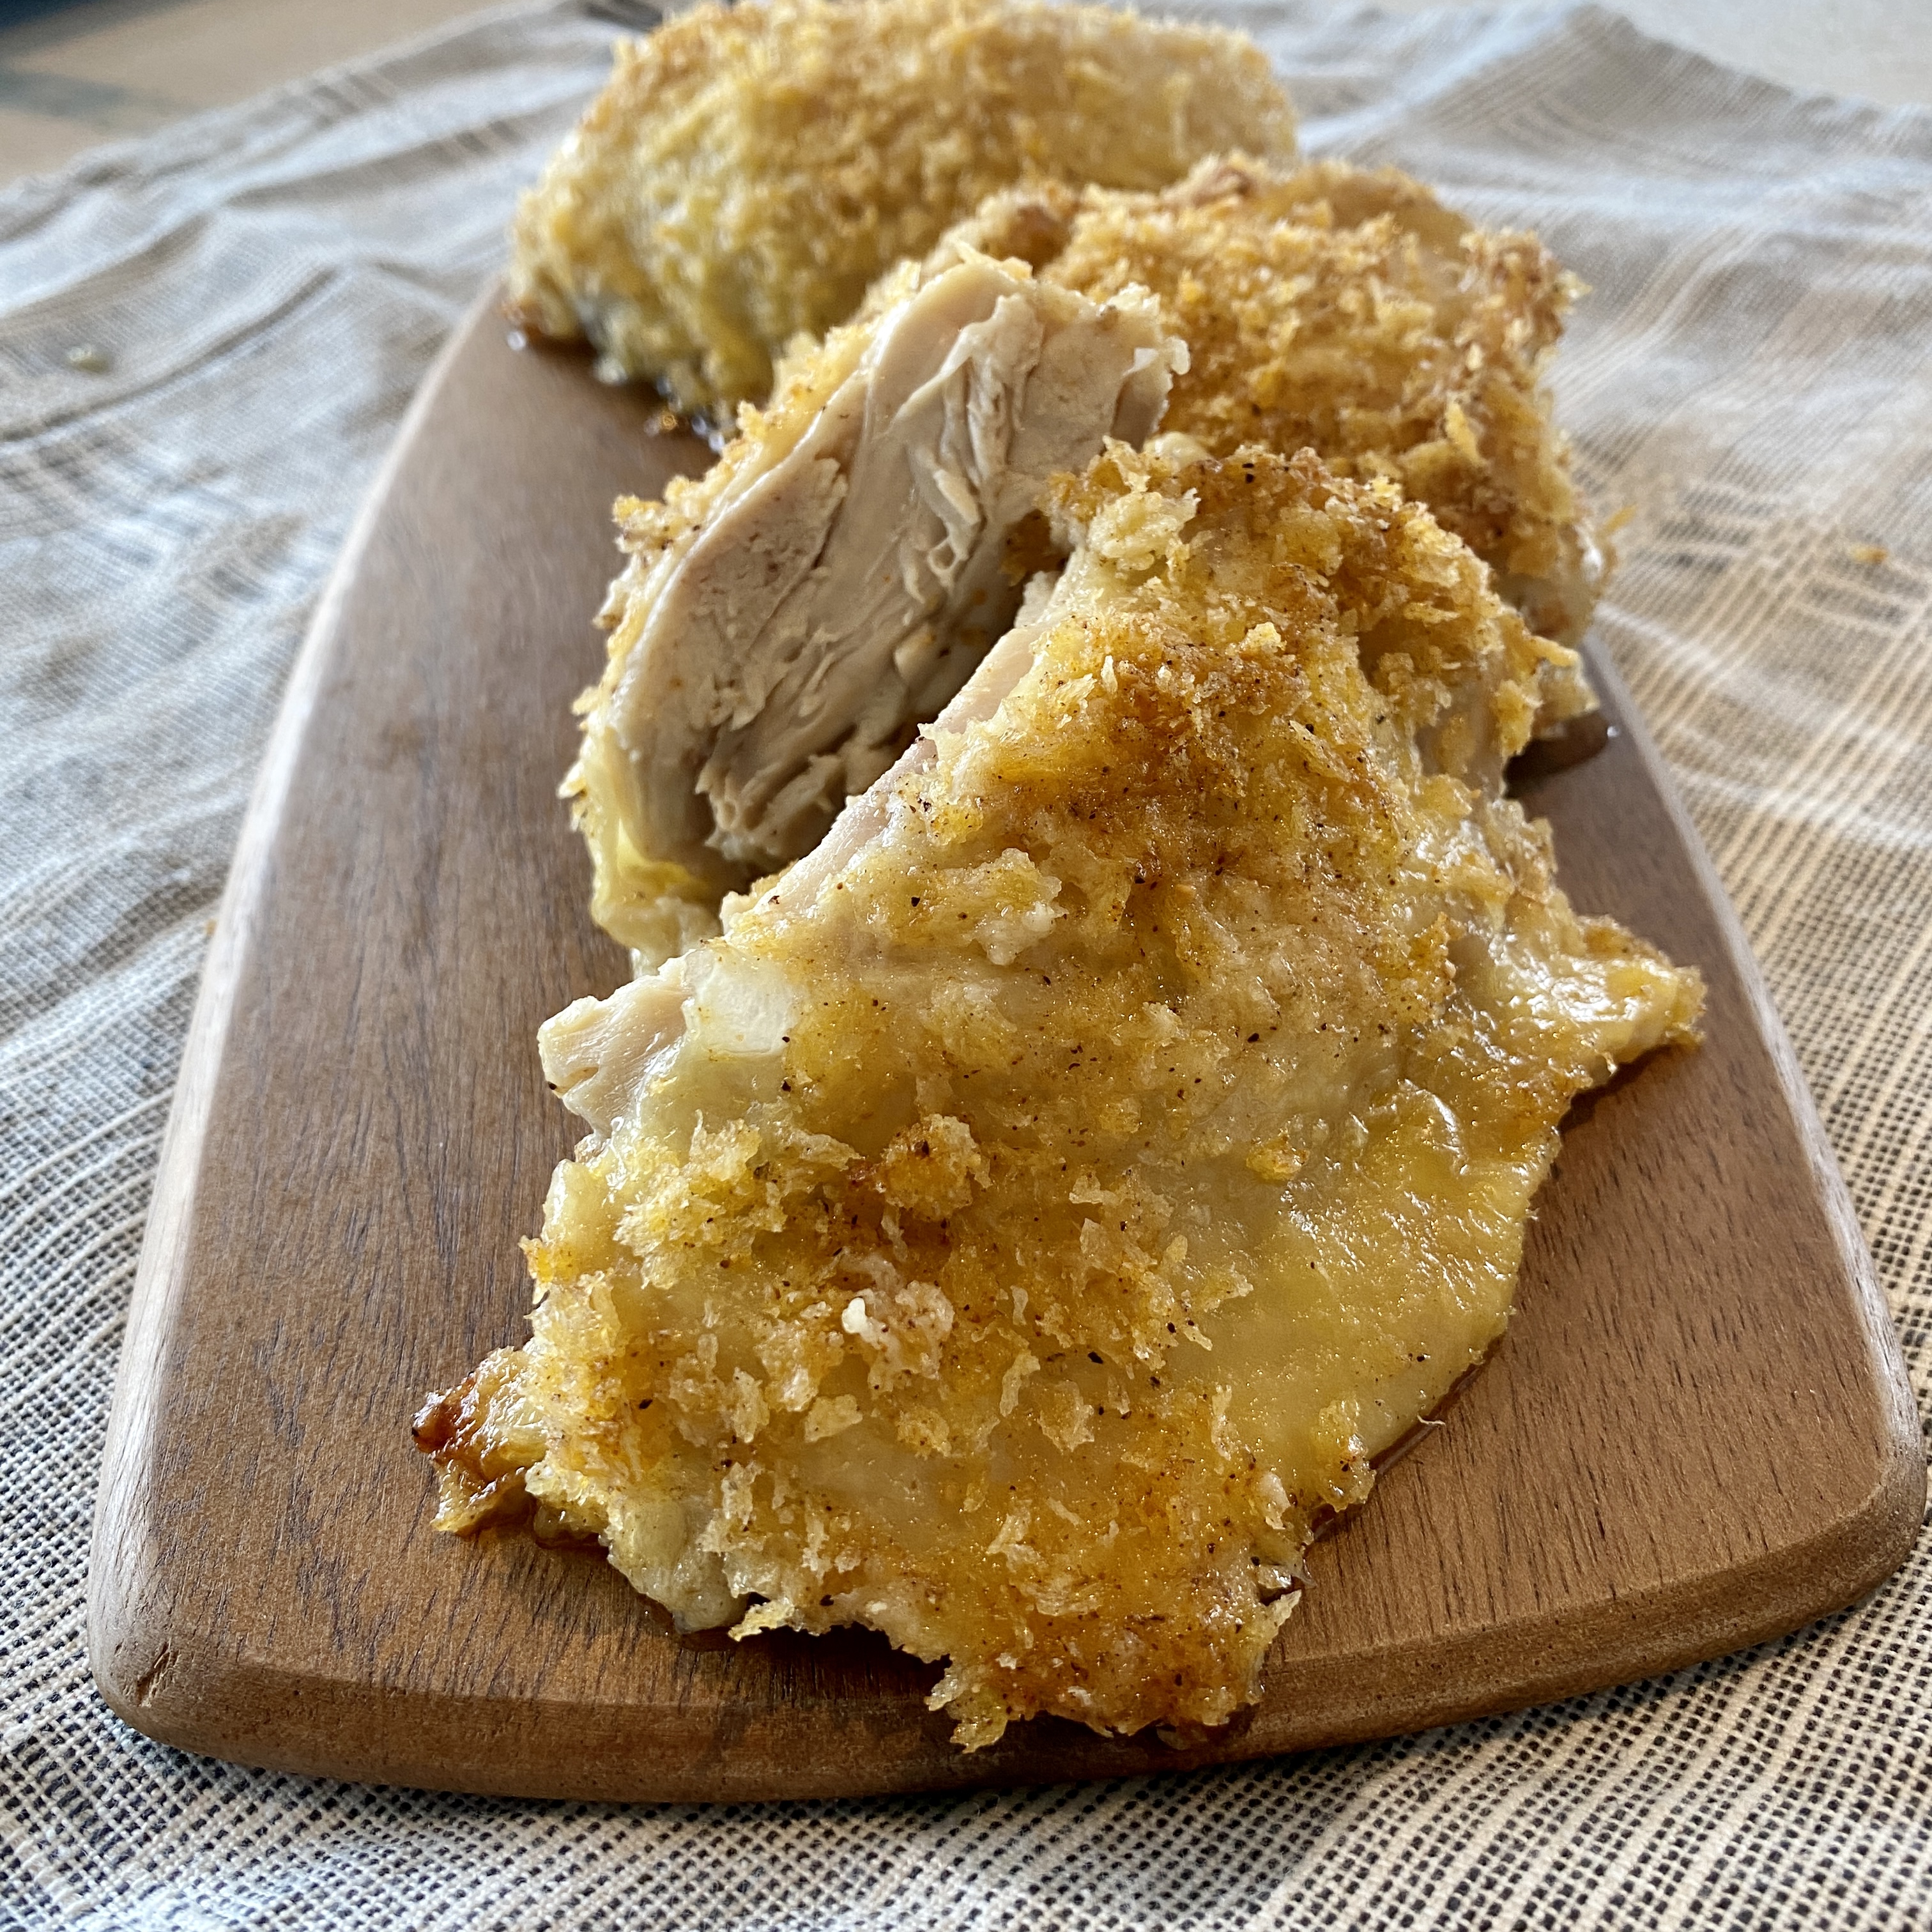 Baked parm chicken